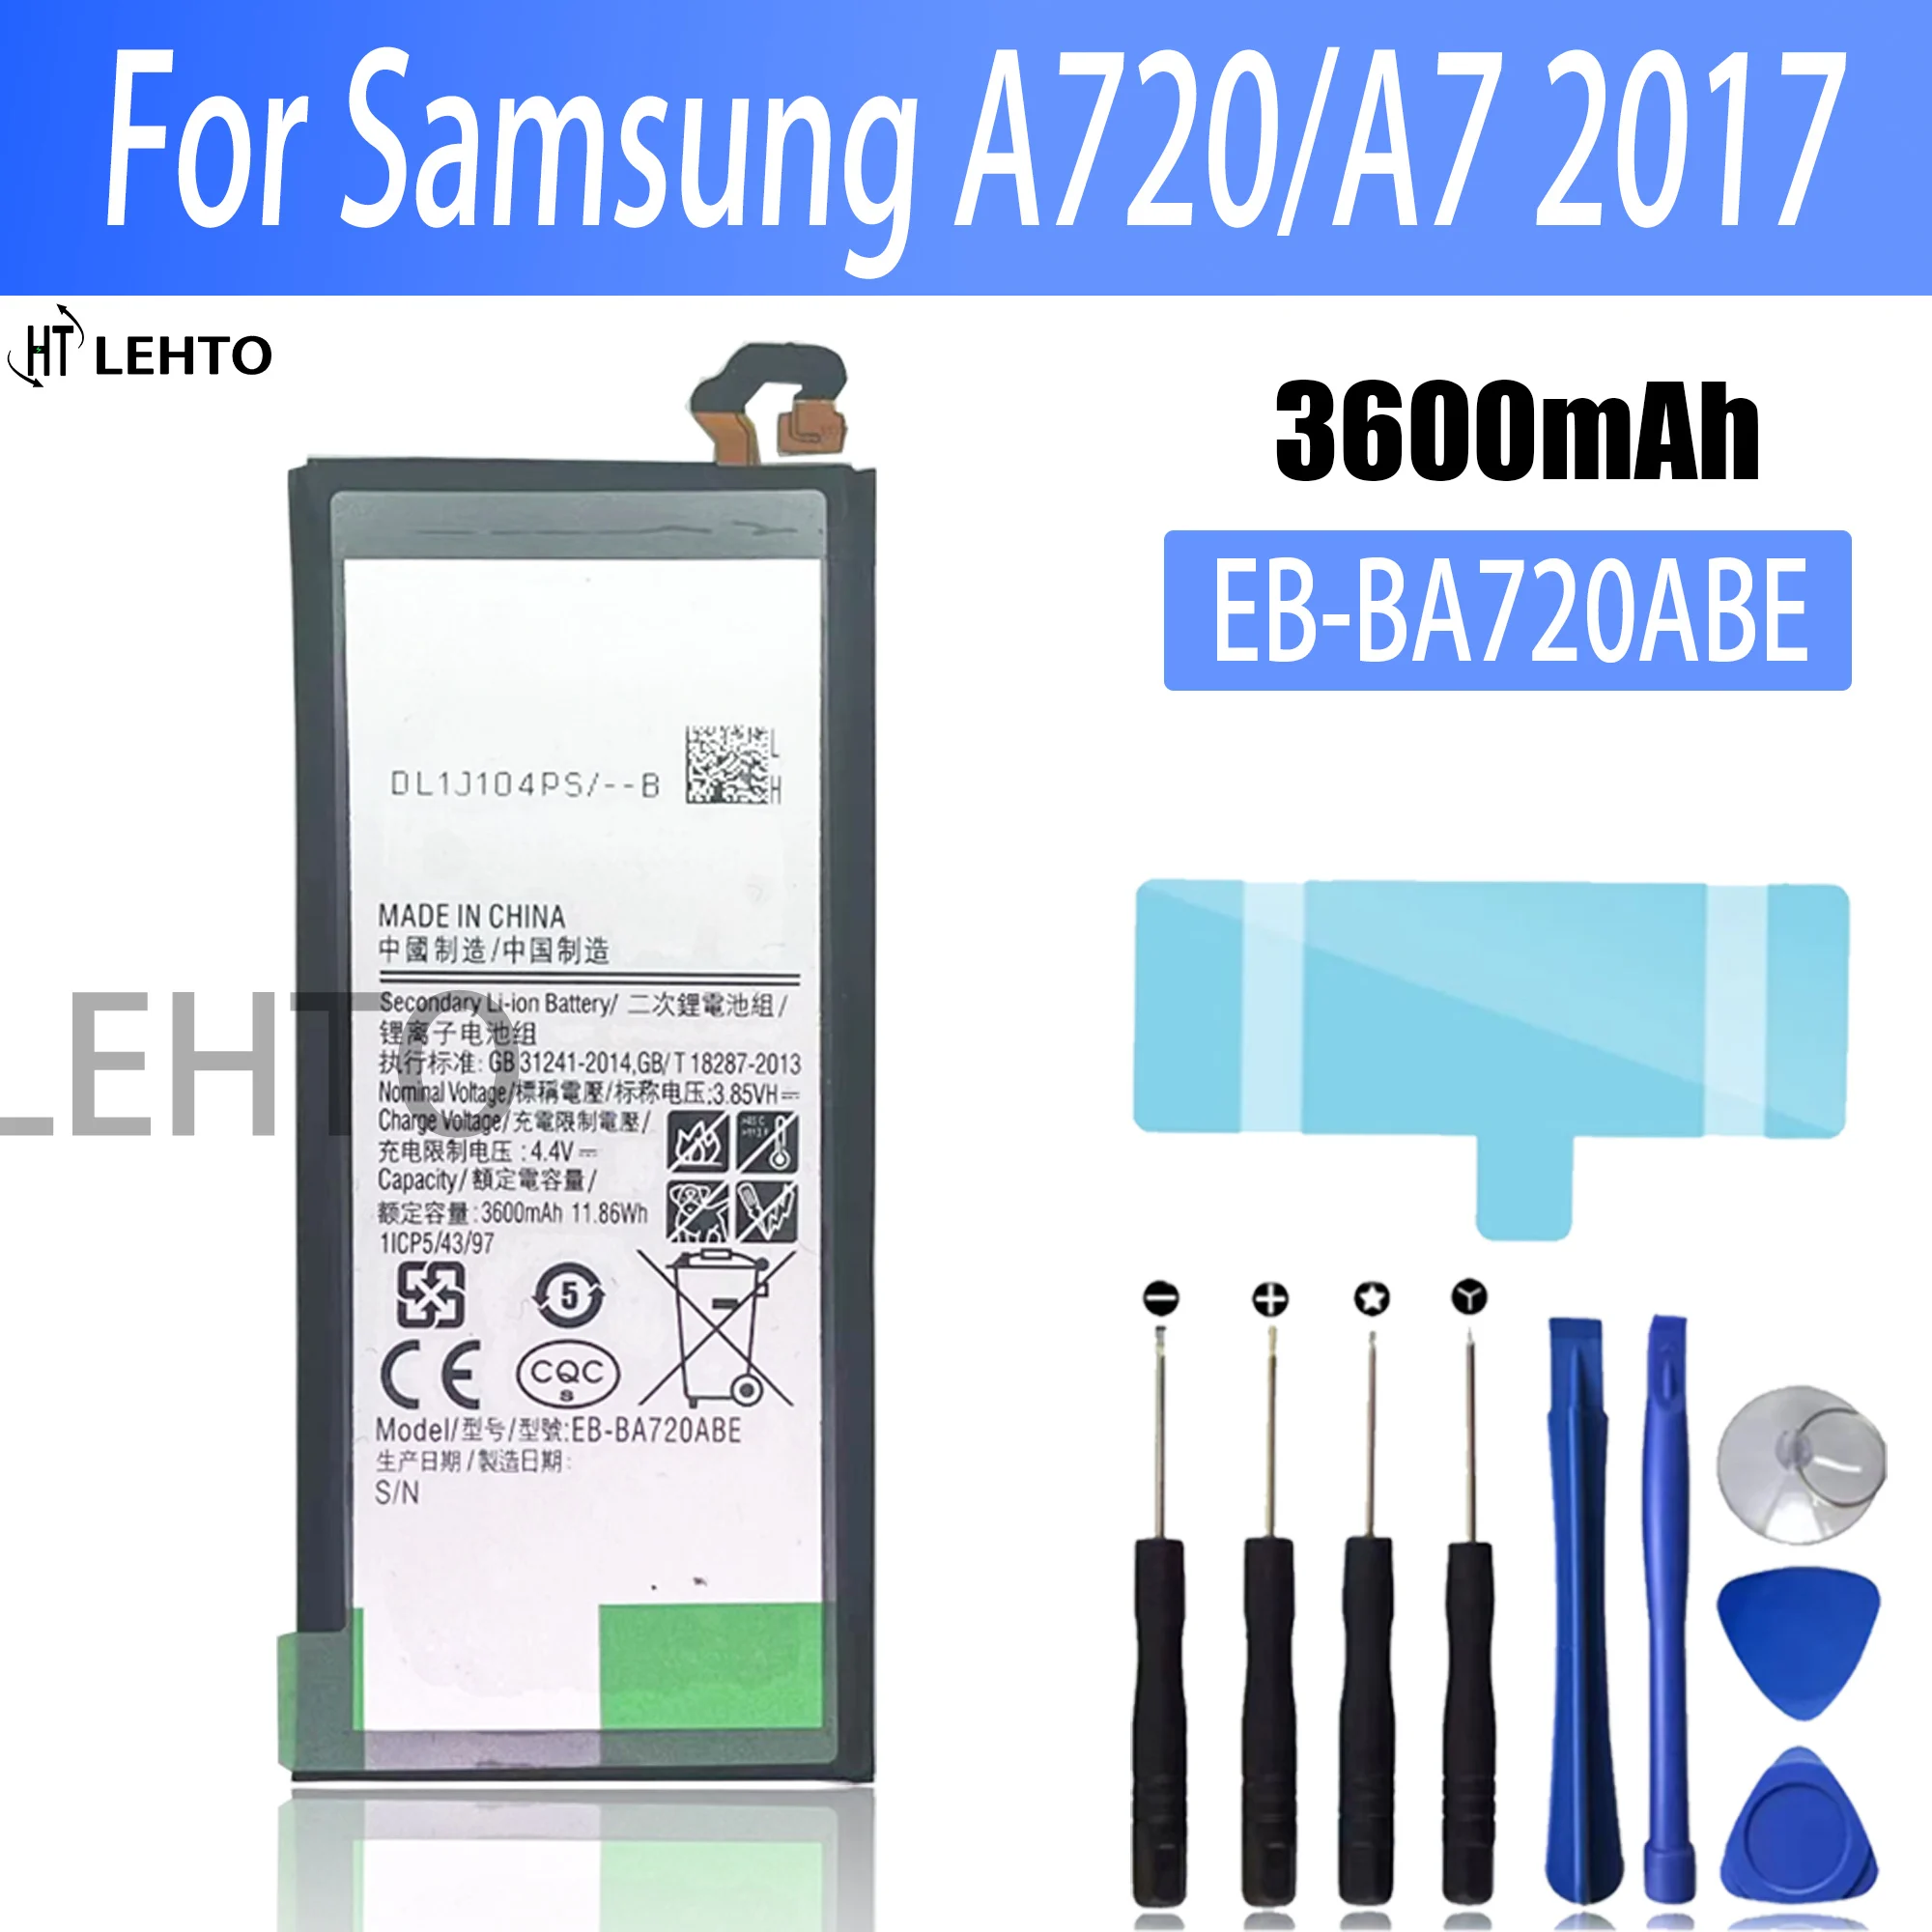 

100% EB-BA720ABE 3600mAh Battery For Samsung Galaxy A7 2017 version A720 SM-A720 A720F SM-A720S A720F/DS